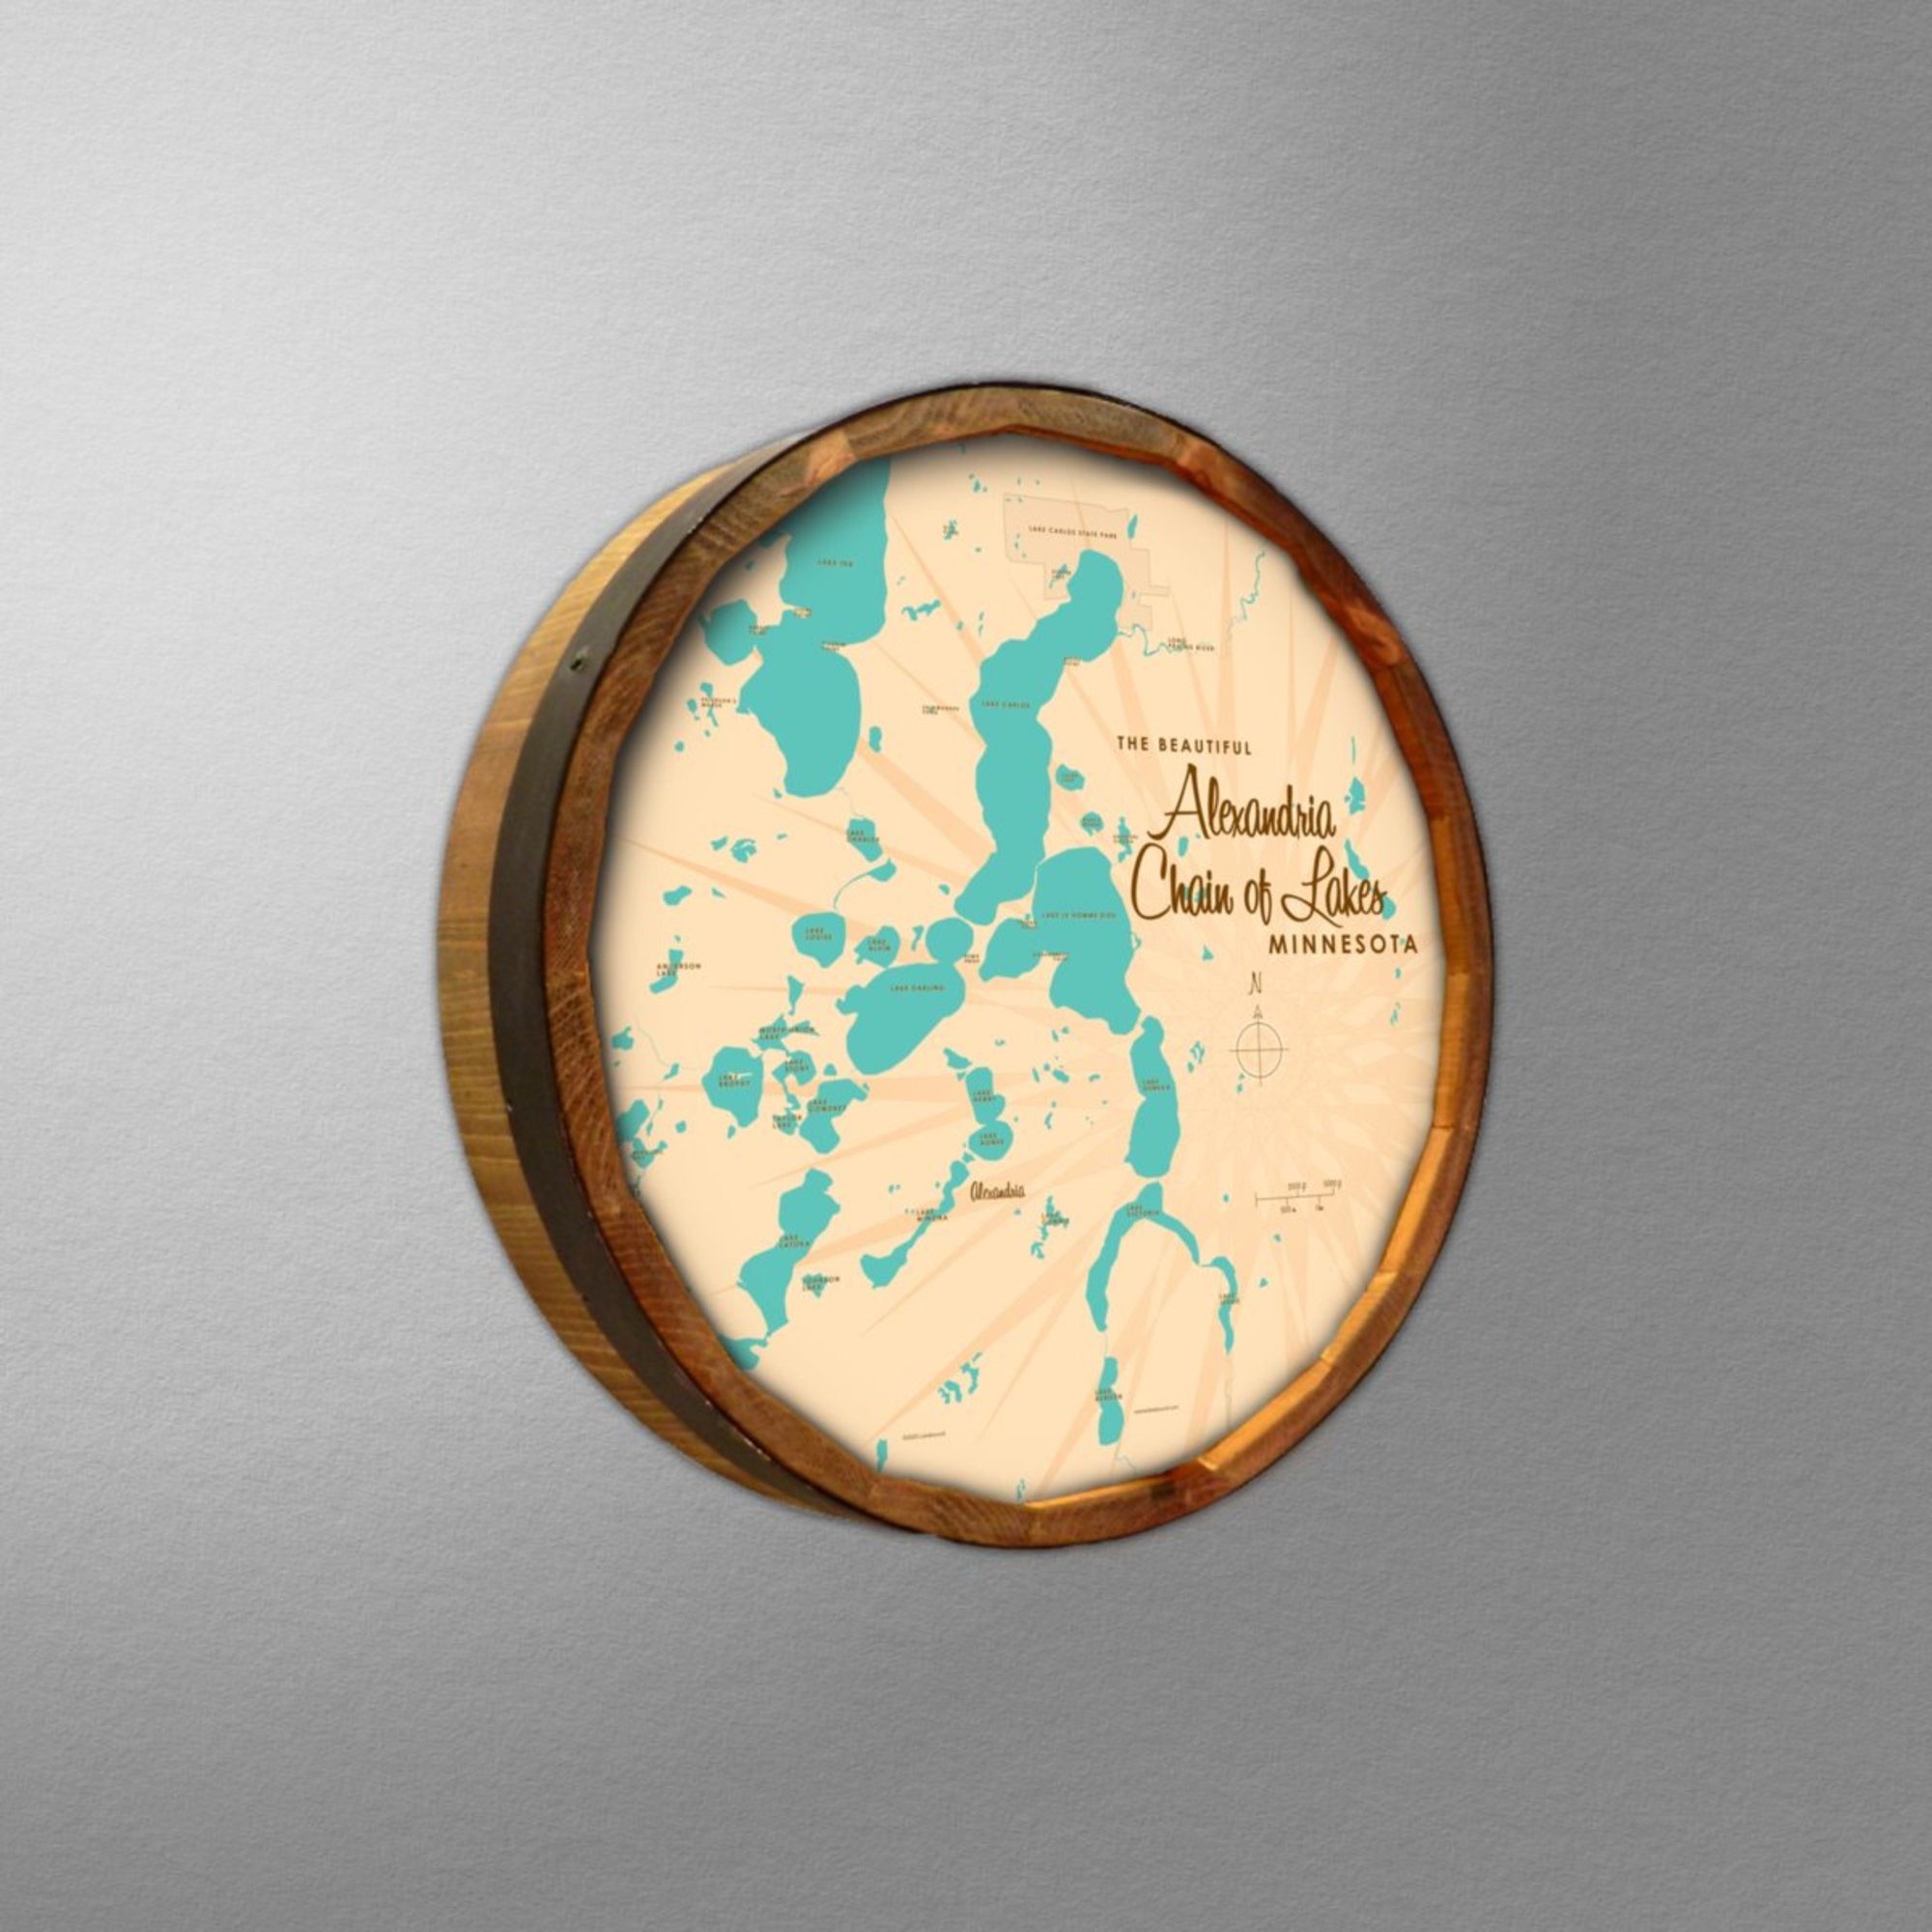 Alexandria Chain of Lakes Minnesota, Barrel End Map Art